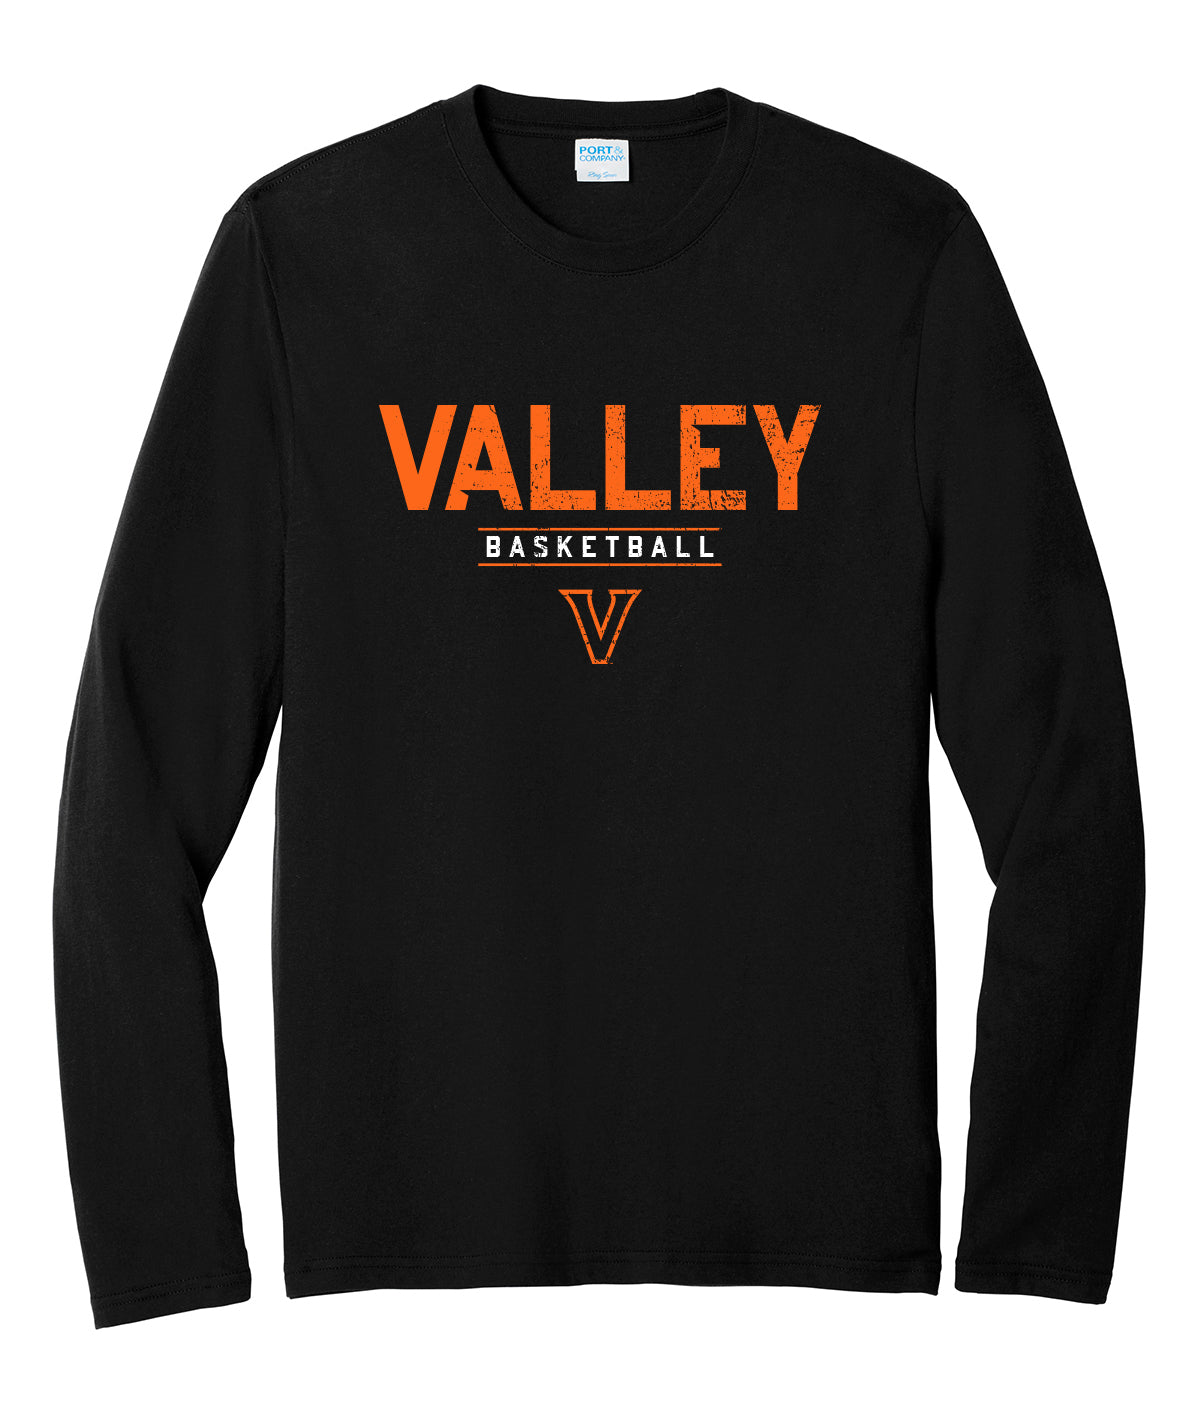 Valley Basketball Long-Sleeve Tee